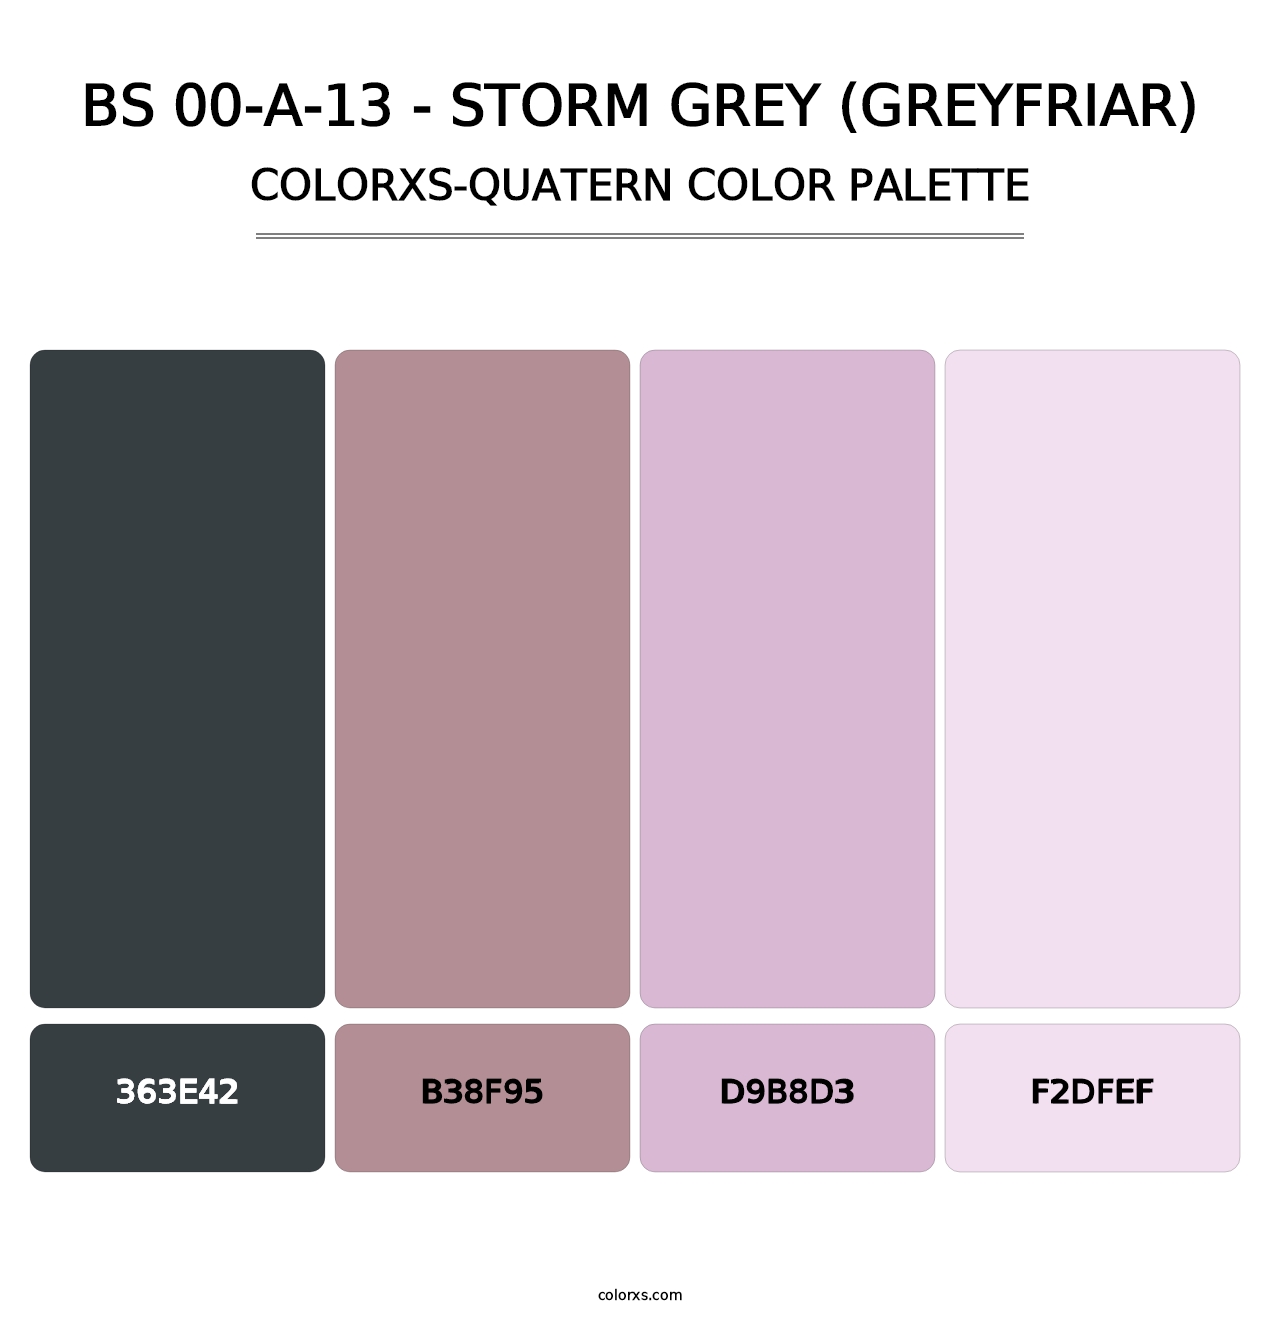 BS 00-A-13 - Storm Grey (Greyfriar) - Colorxs Quatern Palette